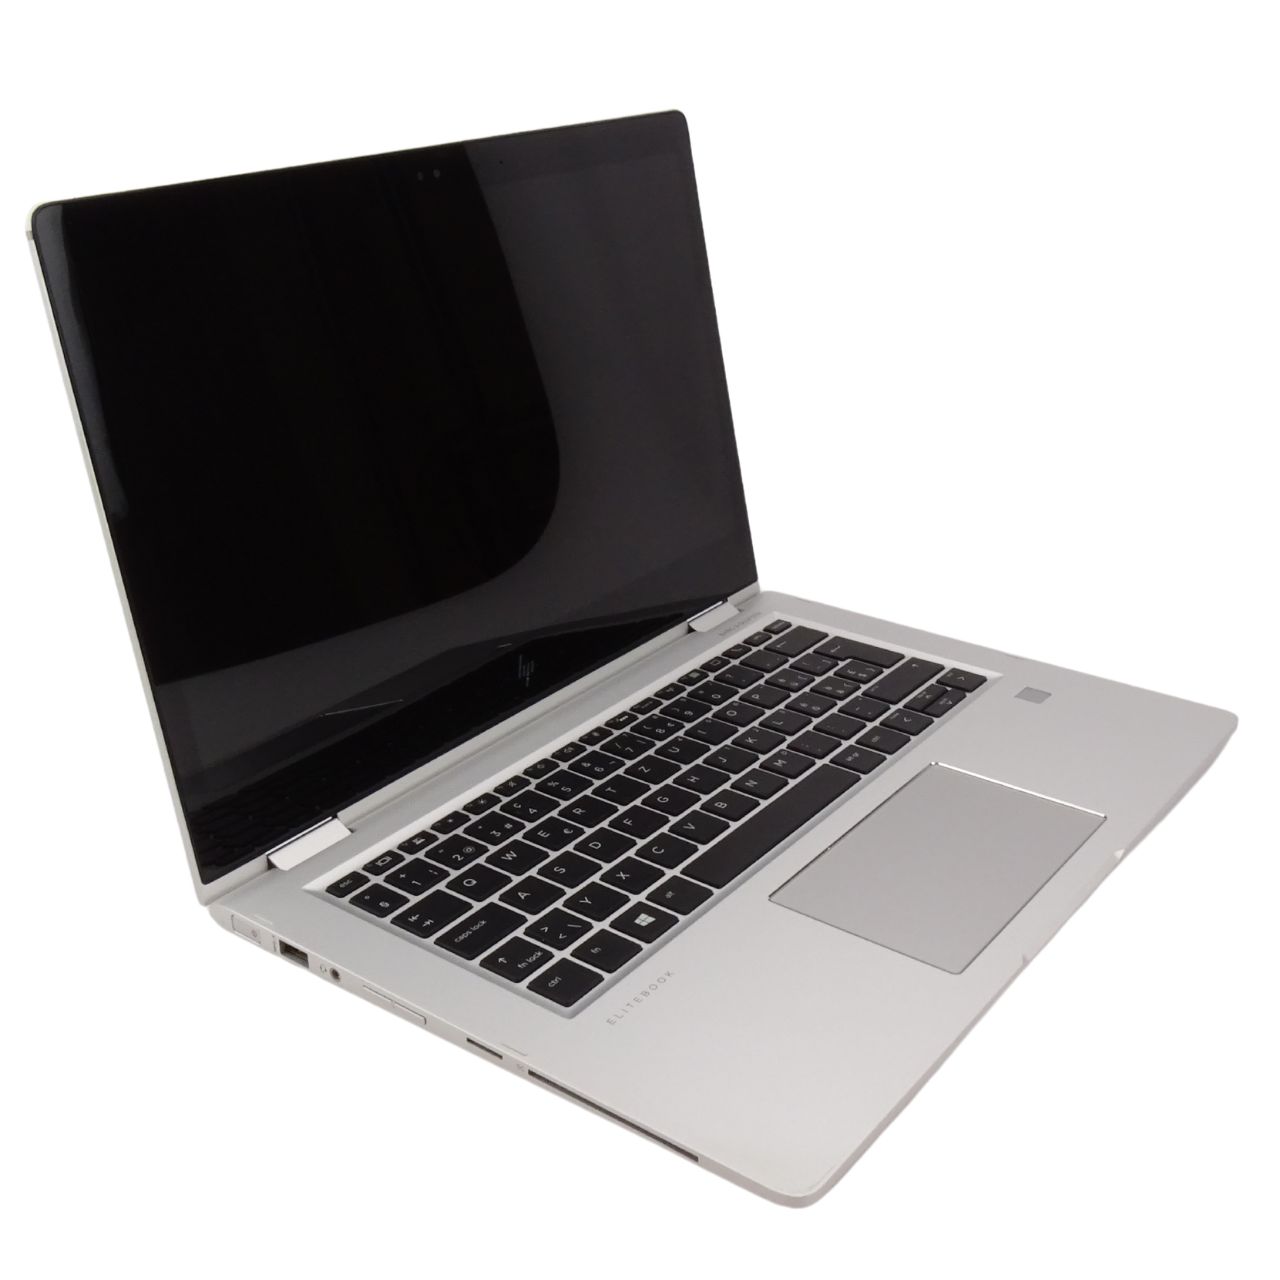 HP EliteBook x360 1030 G2 

 - 13,3 Zoll - Intel Core i5 7200U @ 2,5 GHz - 8 GB - 256 GB SSD - 1920 x 1080 FHD - Touchscreen - Windows 10 Professional - Sehr gut